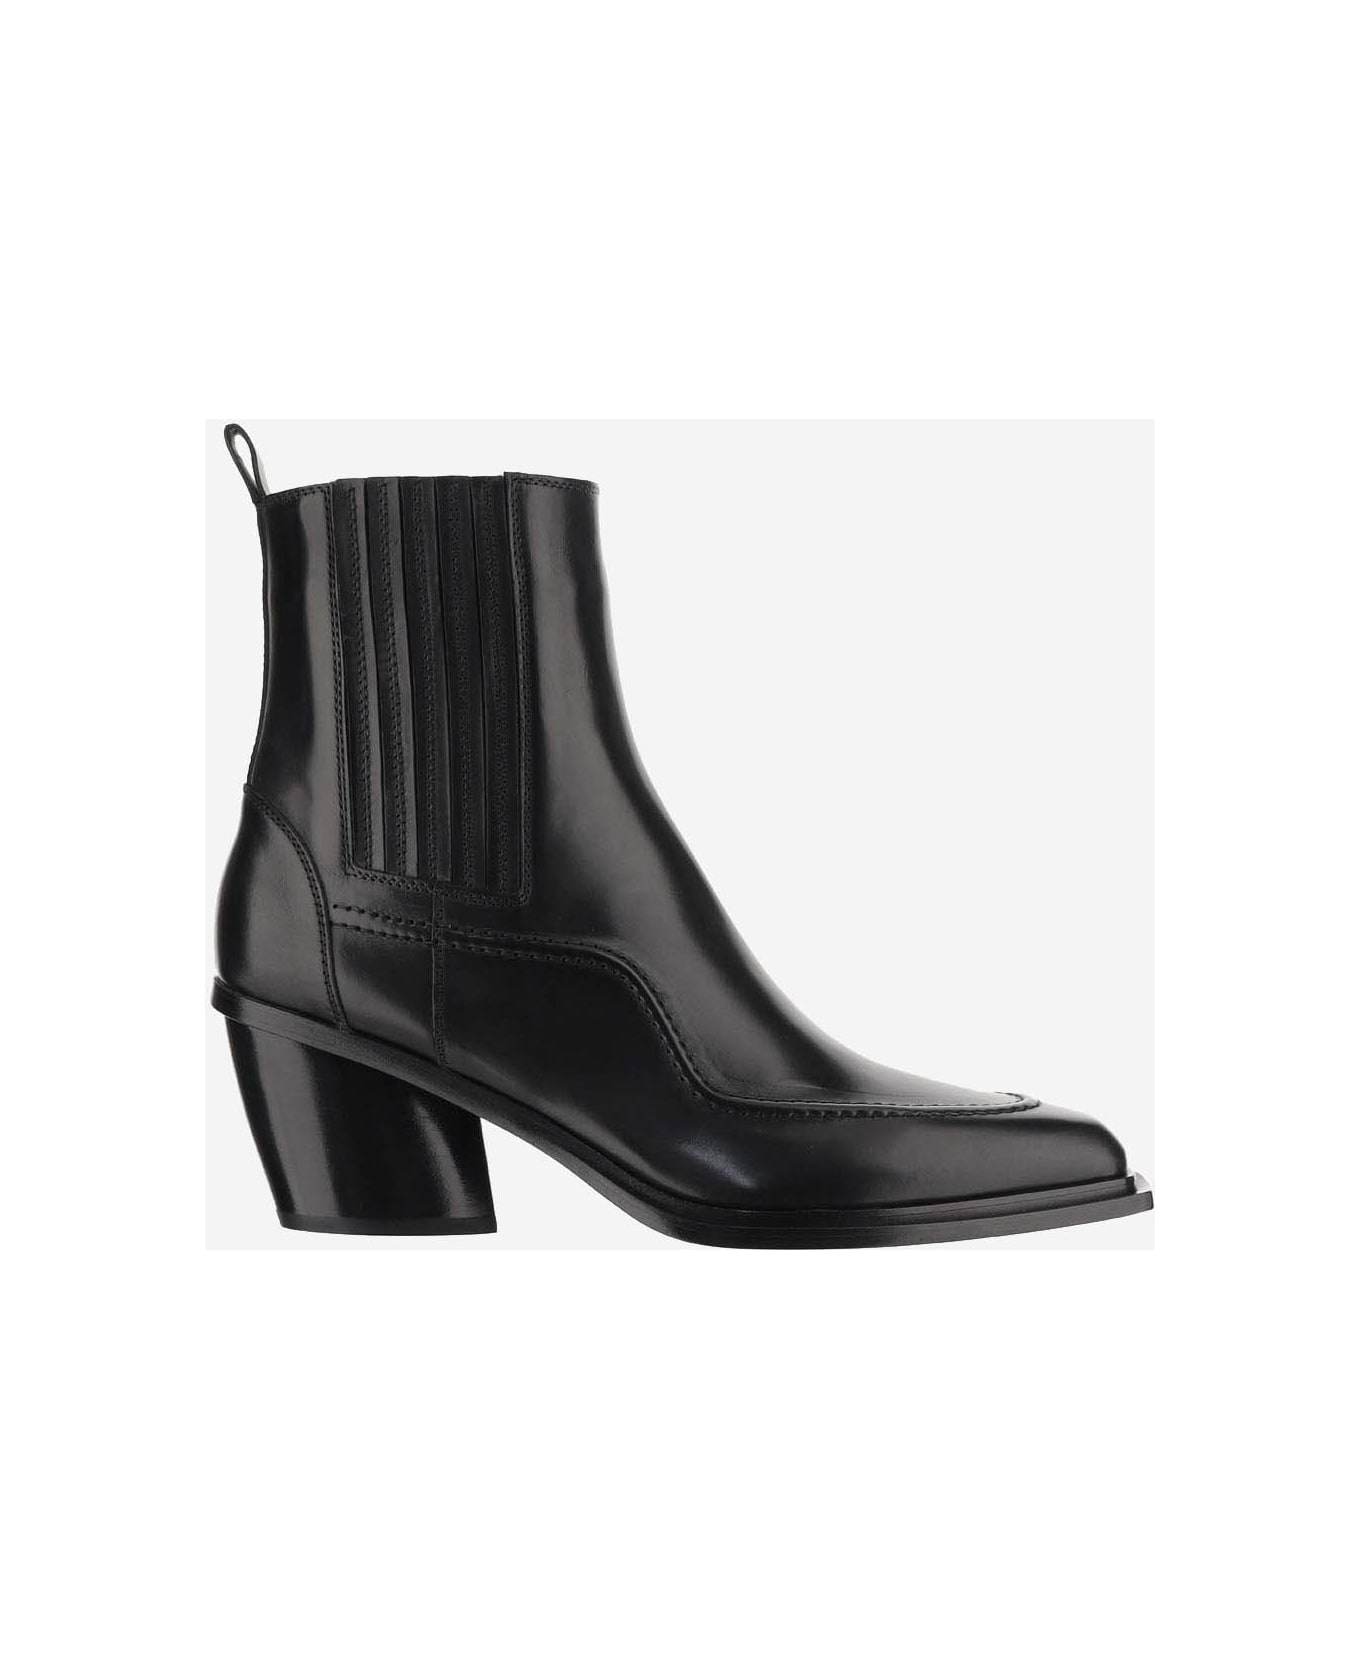 Sartore Leather Boots - Black ブーツ